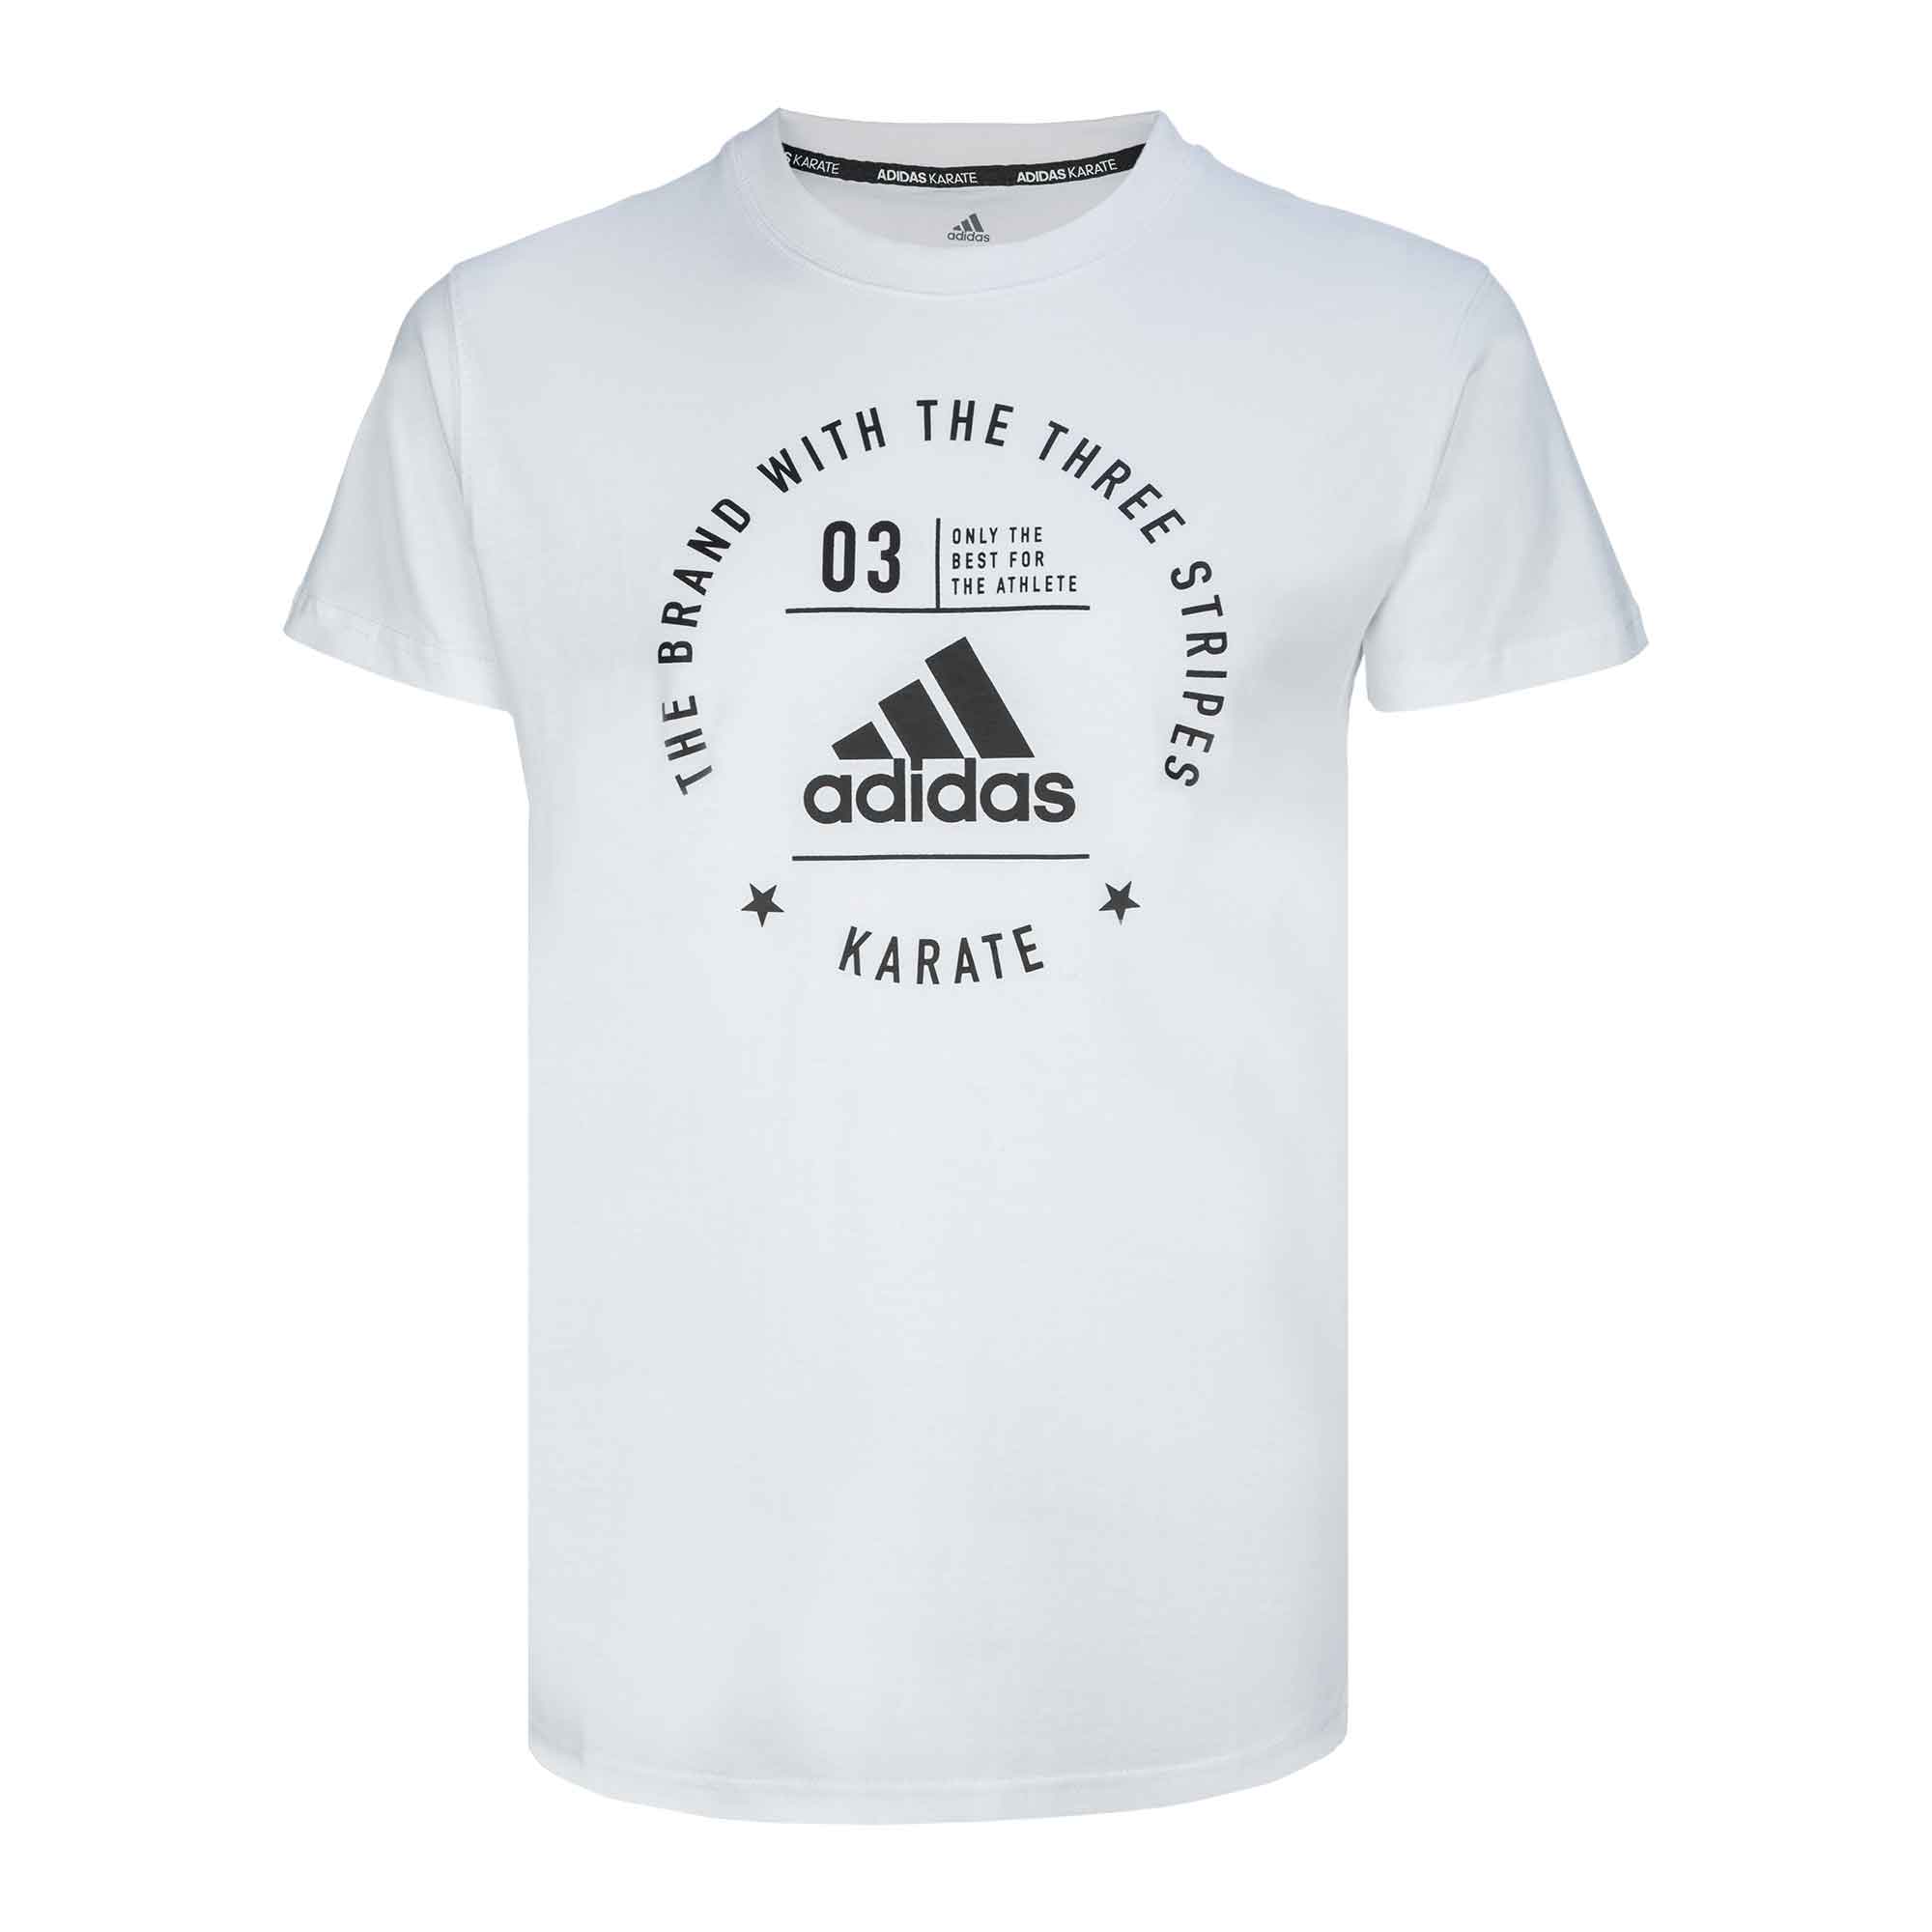 Футболка The Brand With The Three Stripes T-Shirt Karate бело-черная